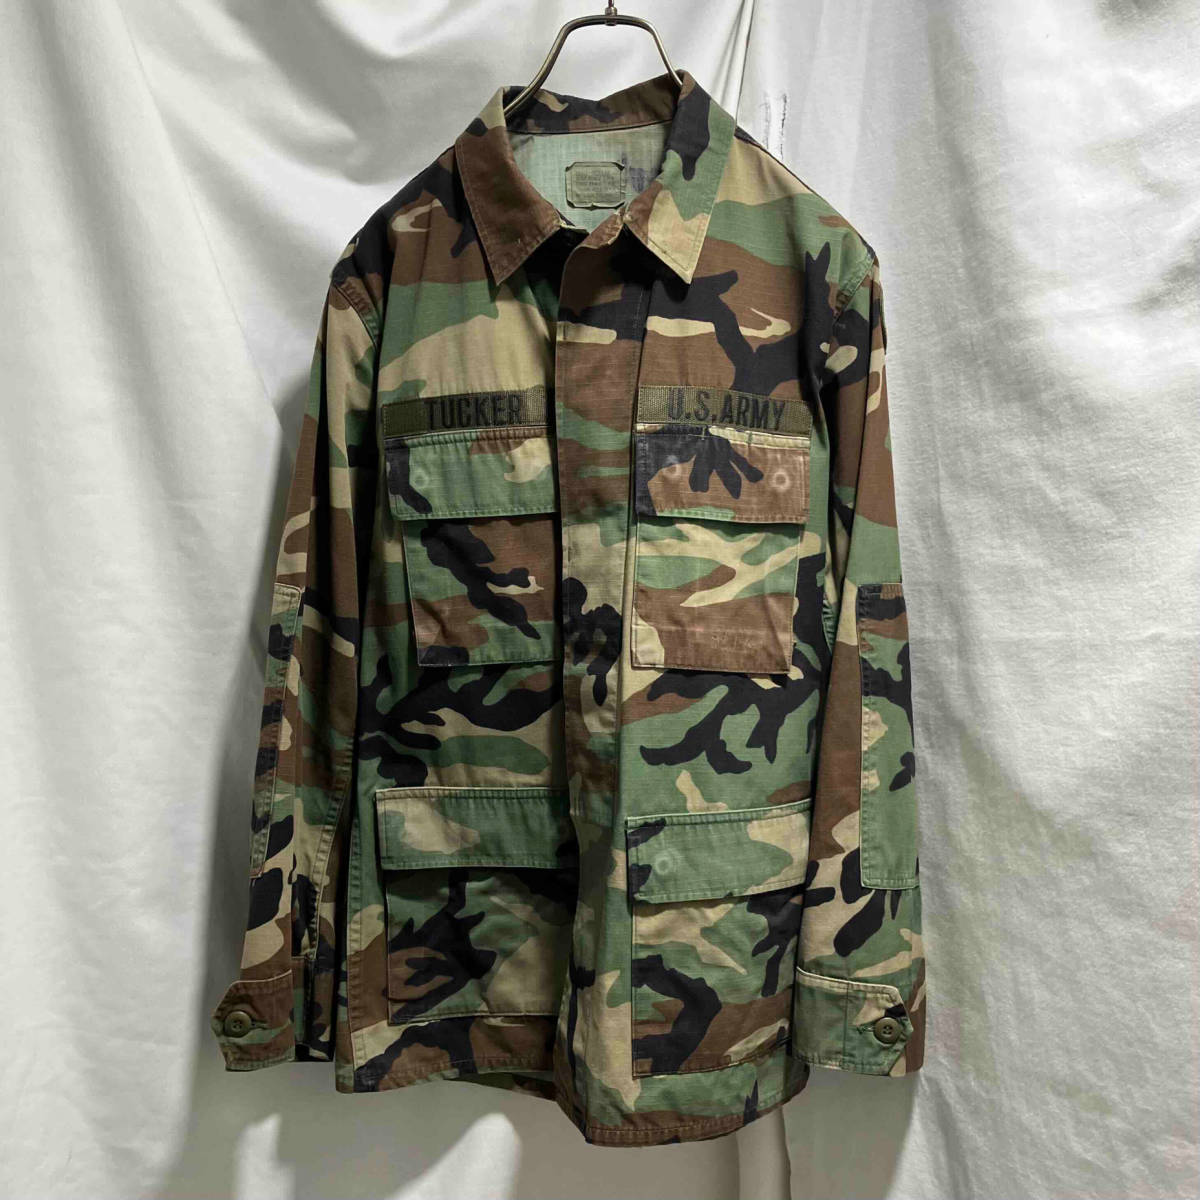 US ARMY military jacket カモ柄ミリタリージャケット ユーエスアーミー 店舗受取可_画像1